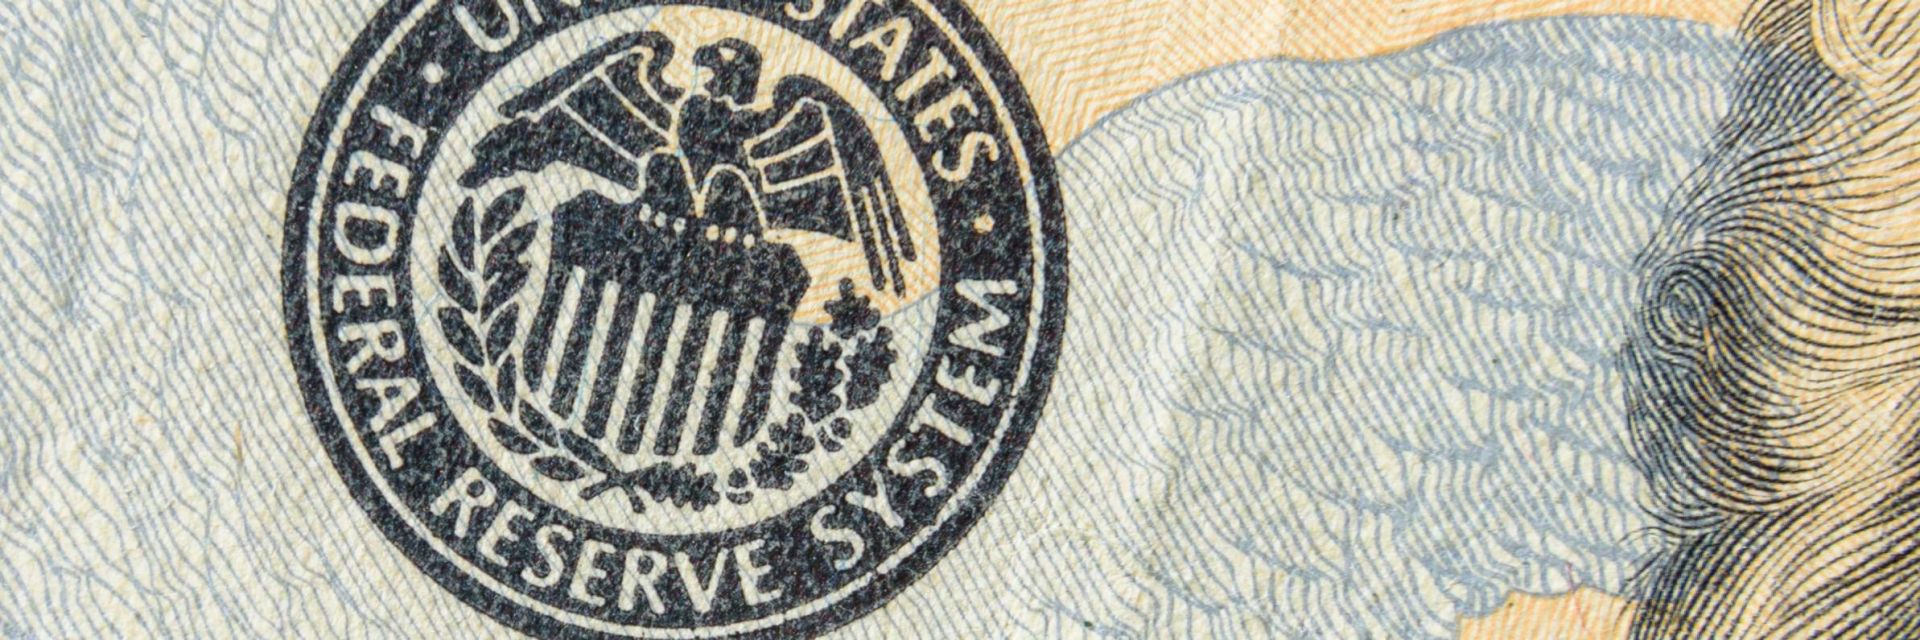 Federal Reserve stamp on dollar.